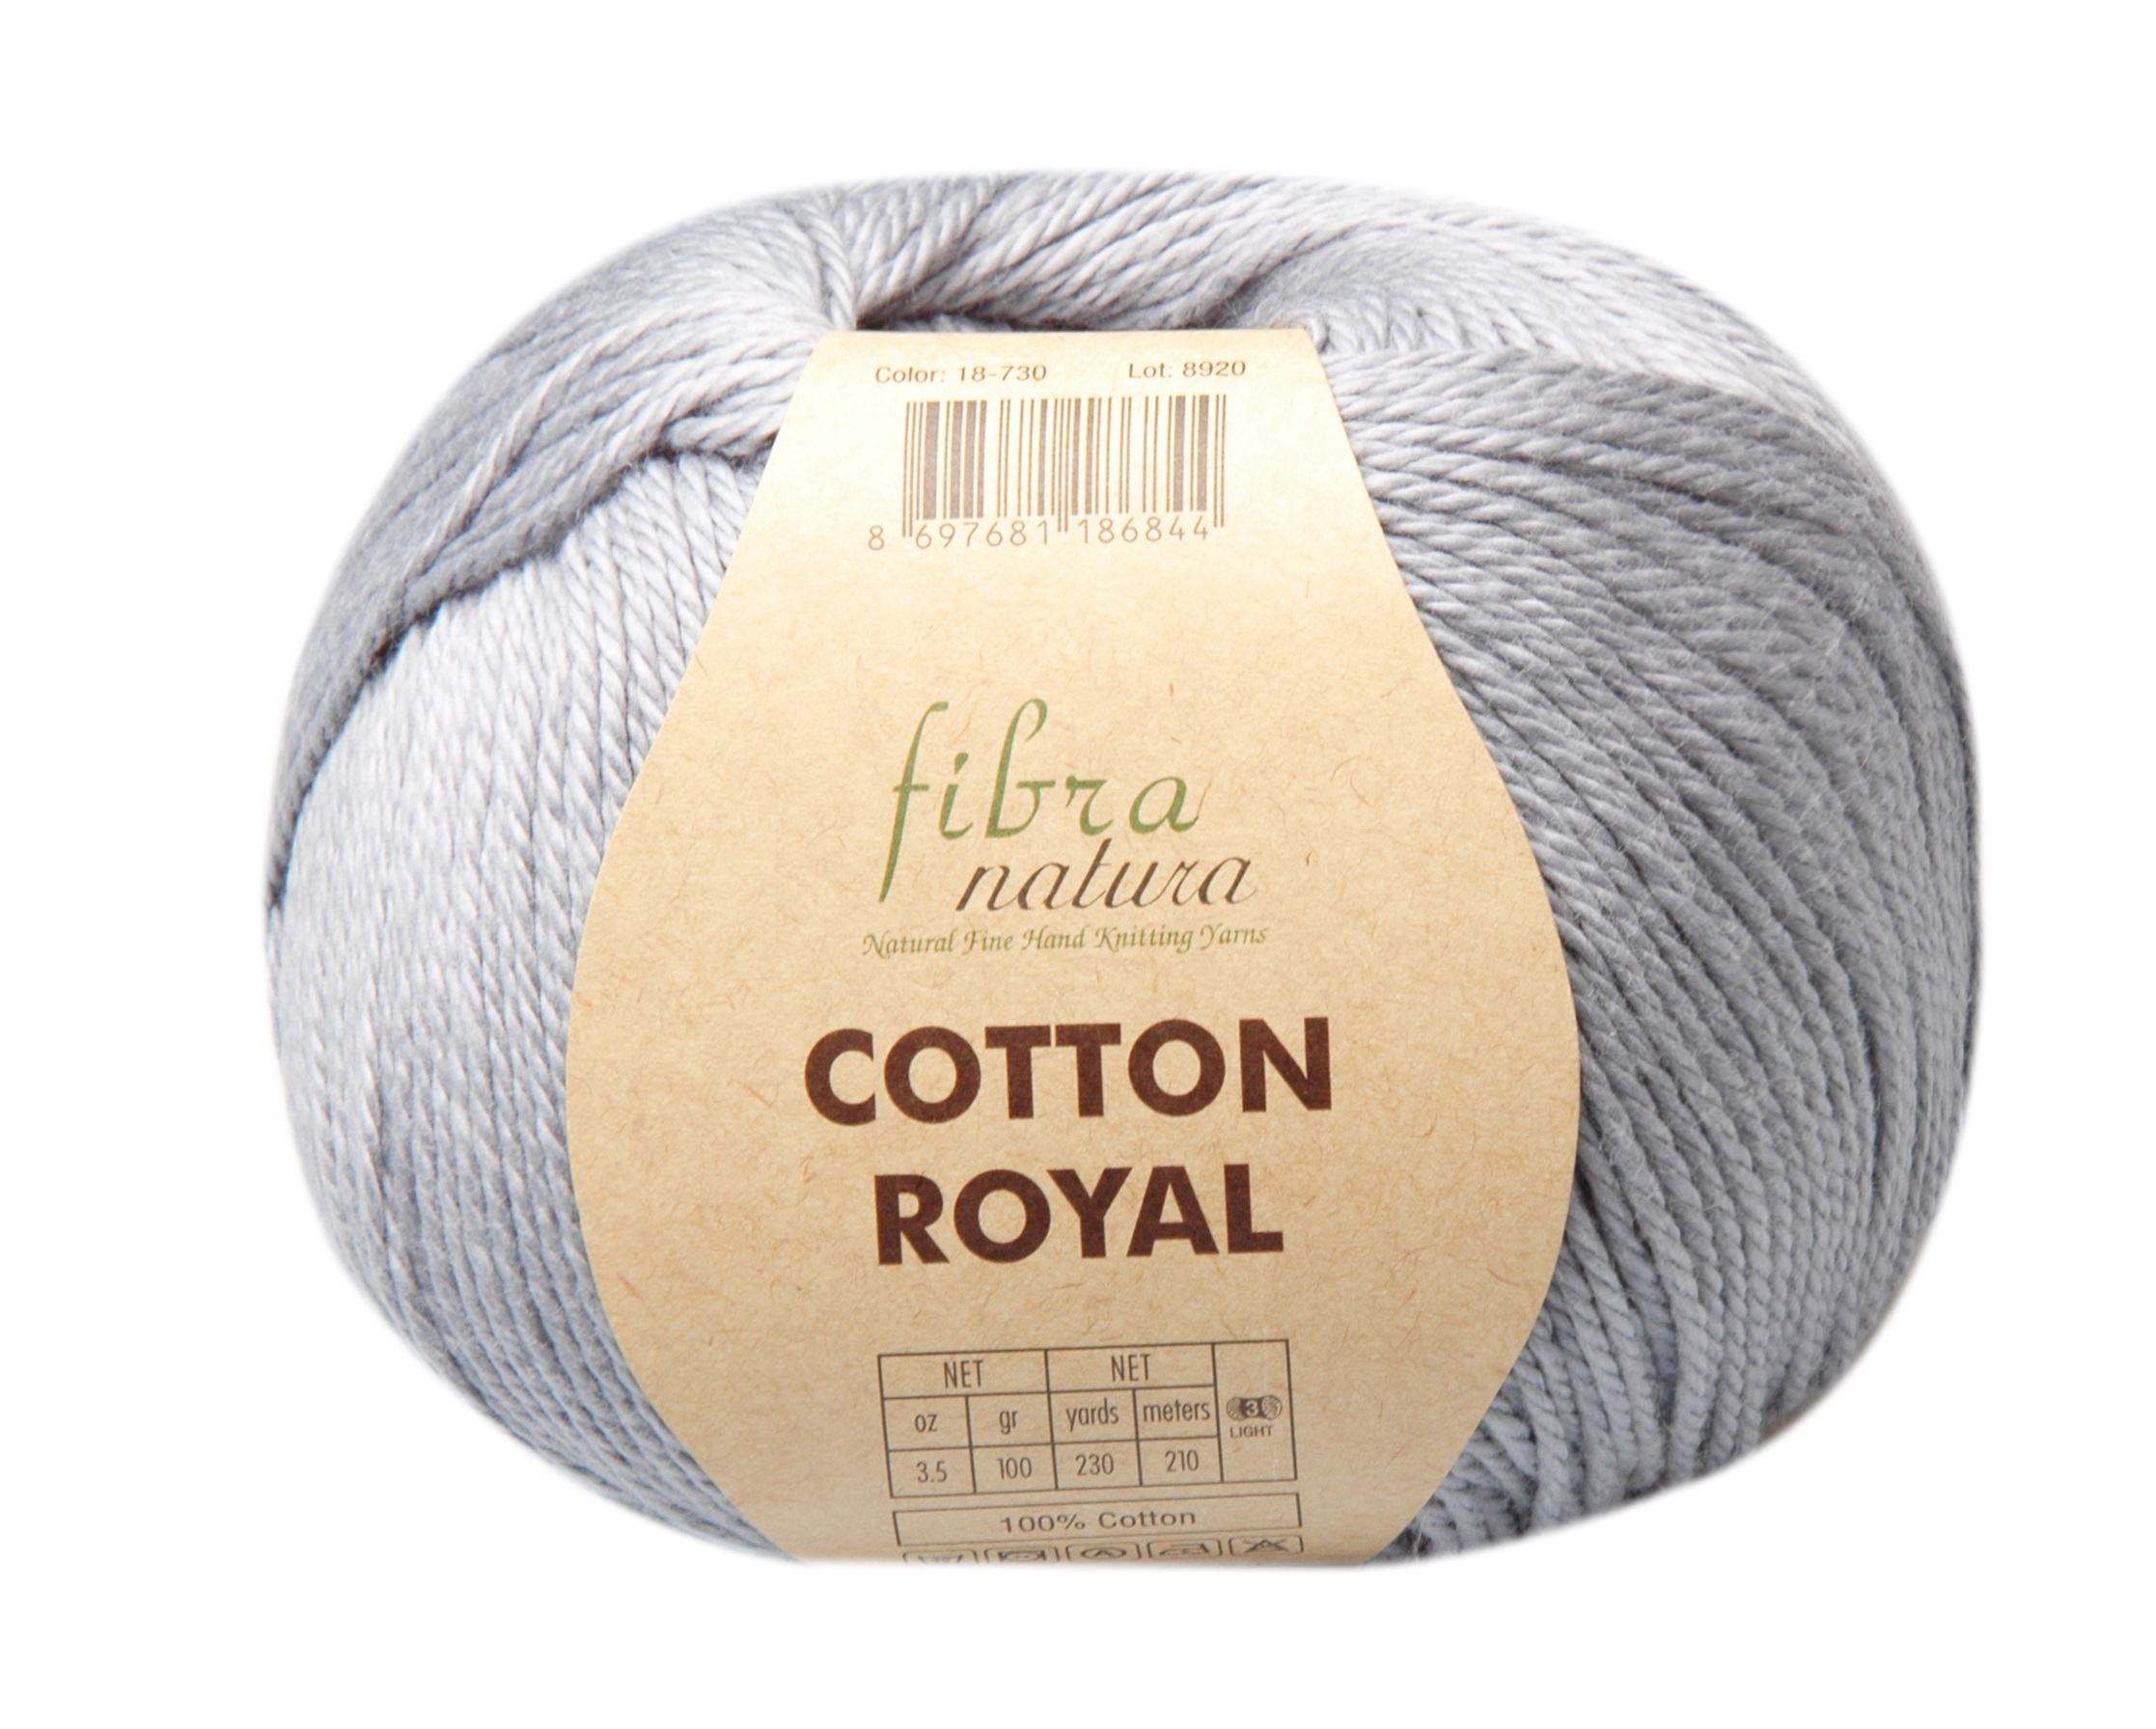 Cotton Royal 18-730 серый